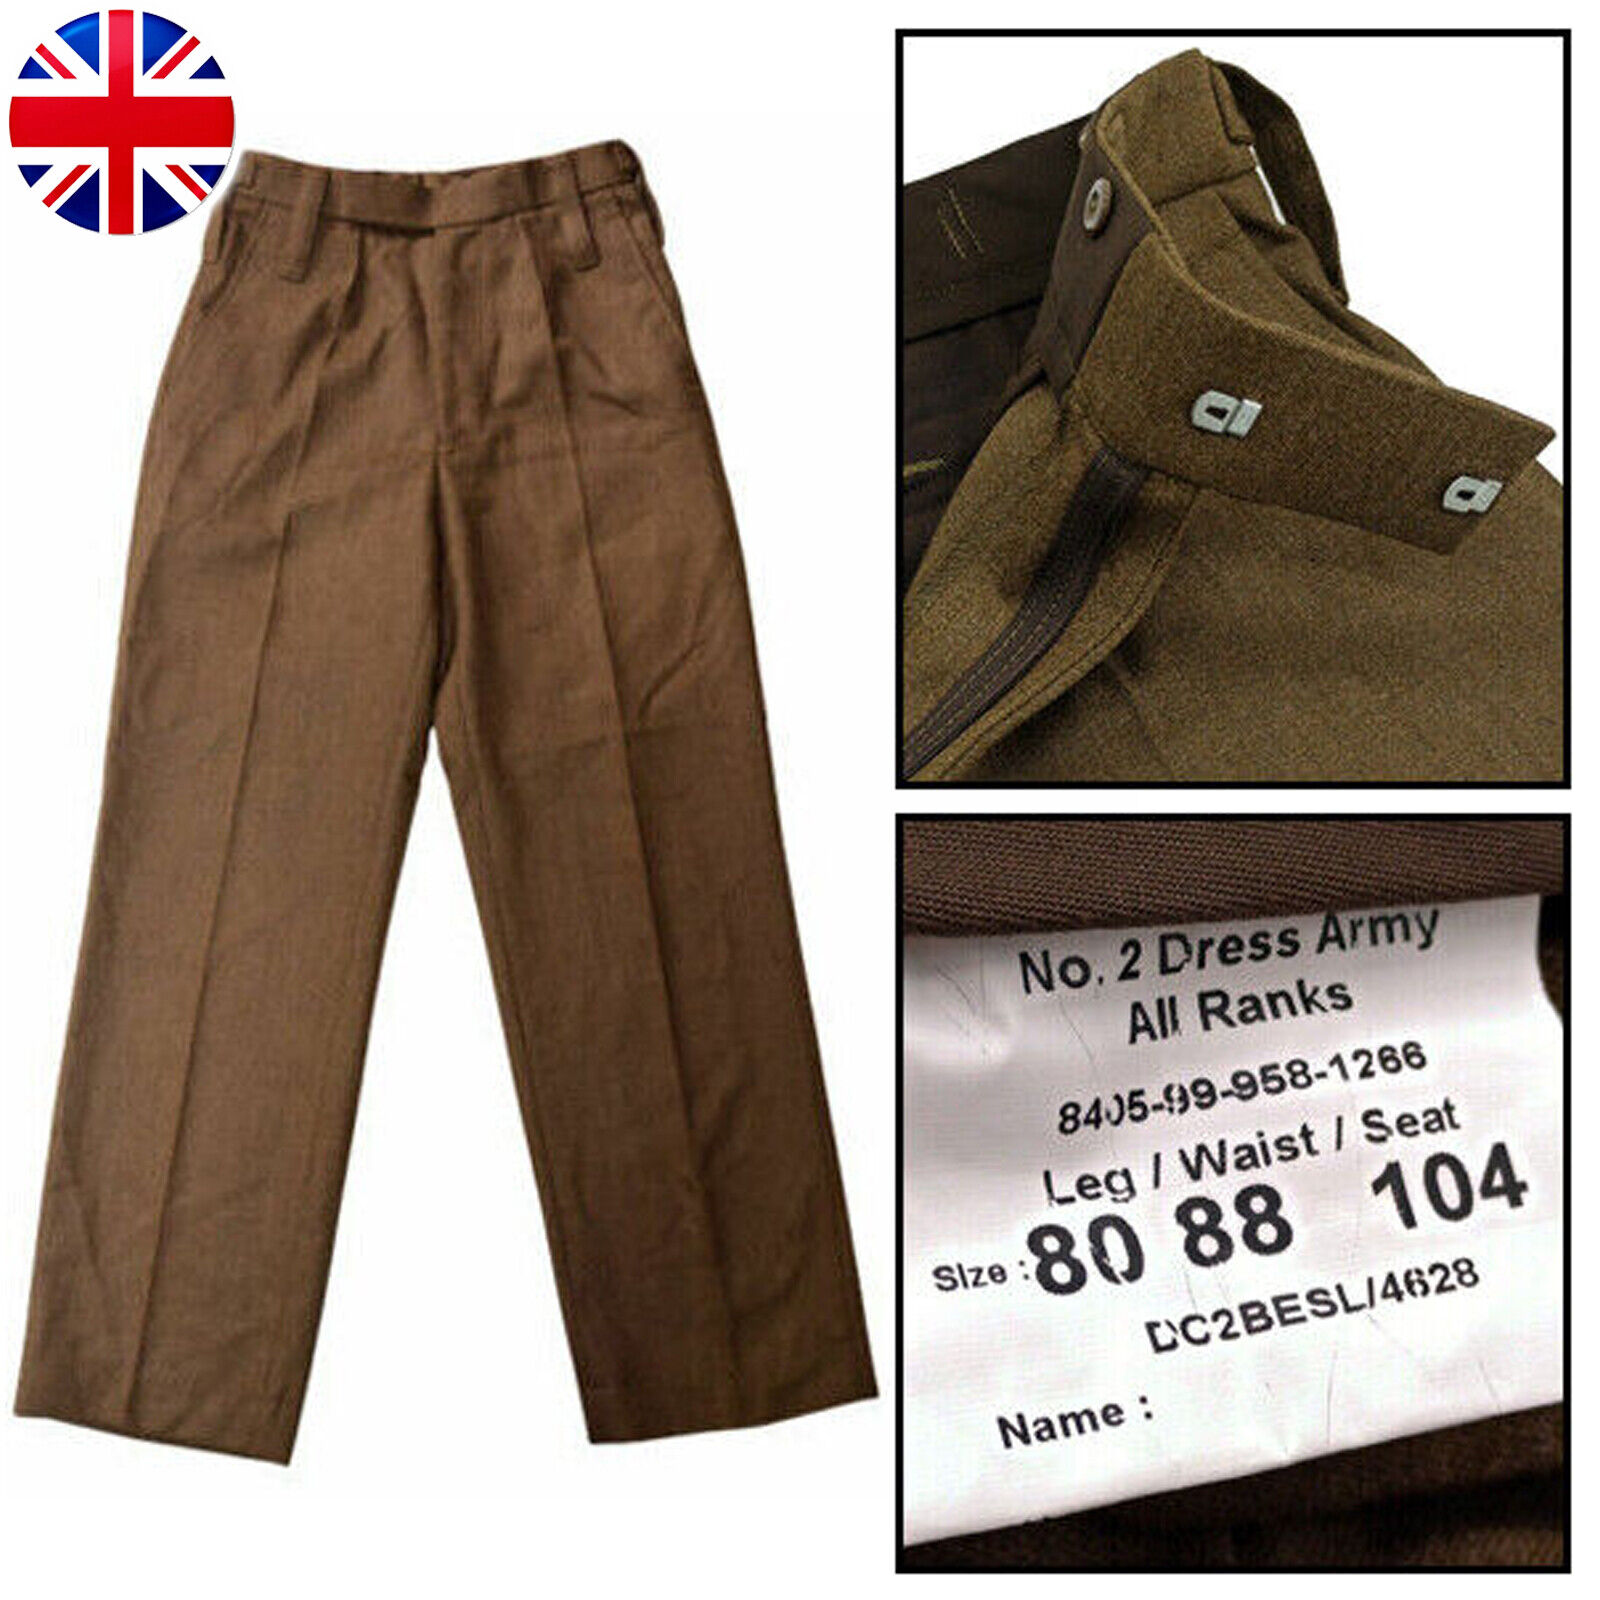 Wool 100% British Army Trousers Pants Brown Khaki No 2 Dress All Rank Uniform